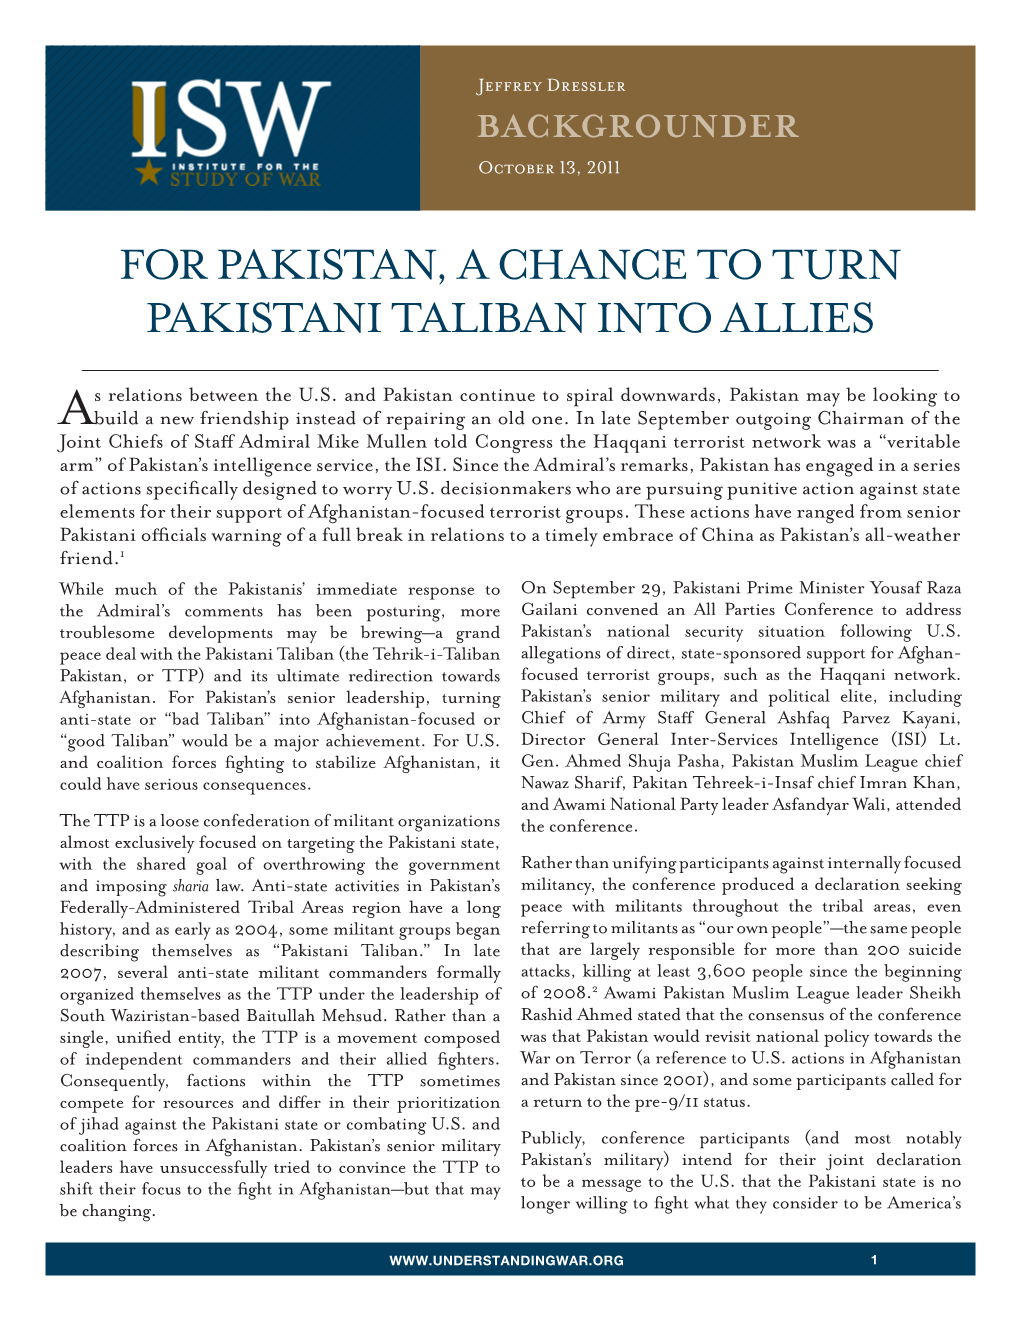 For Pakistan, a Chance to Turn Pakistani Taliban Into Allies